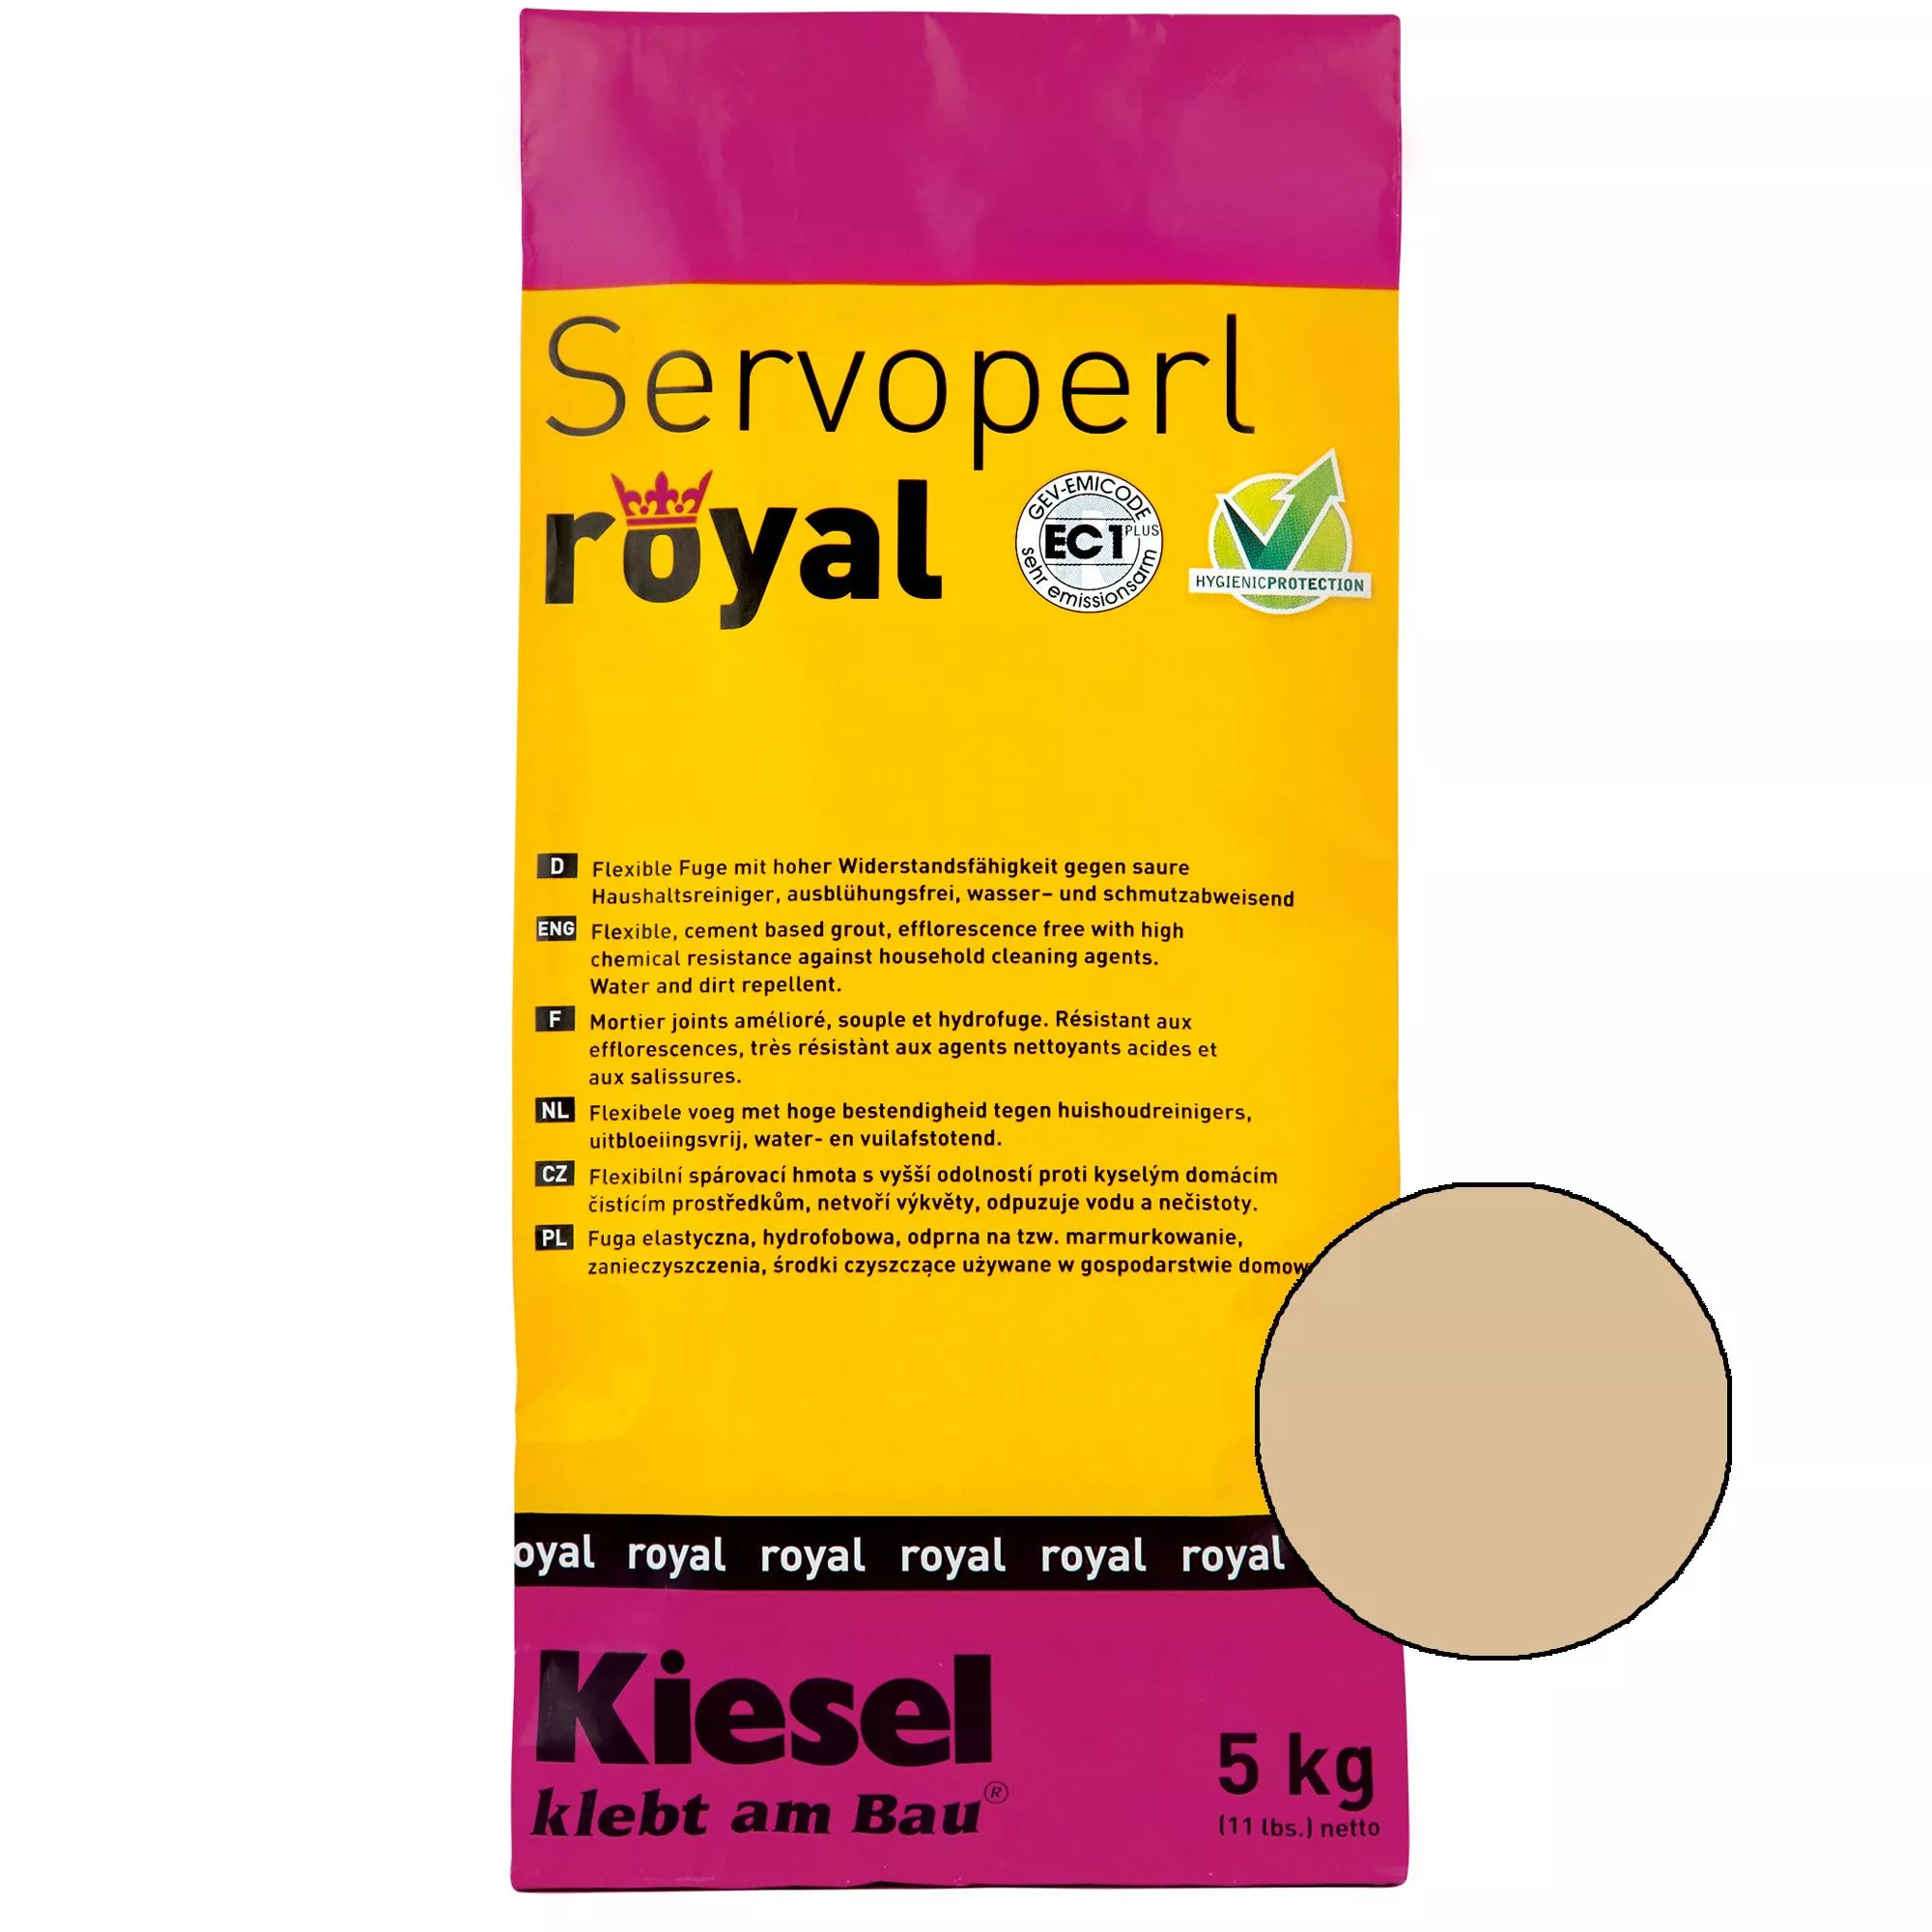 Kiesel Servoperl royal - Flexible, water- and dirt-repellent joint (5KG Safari Sand)